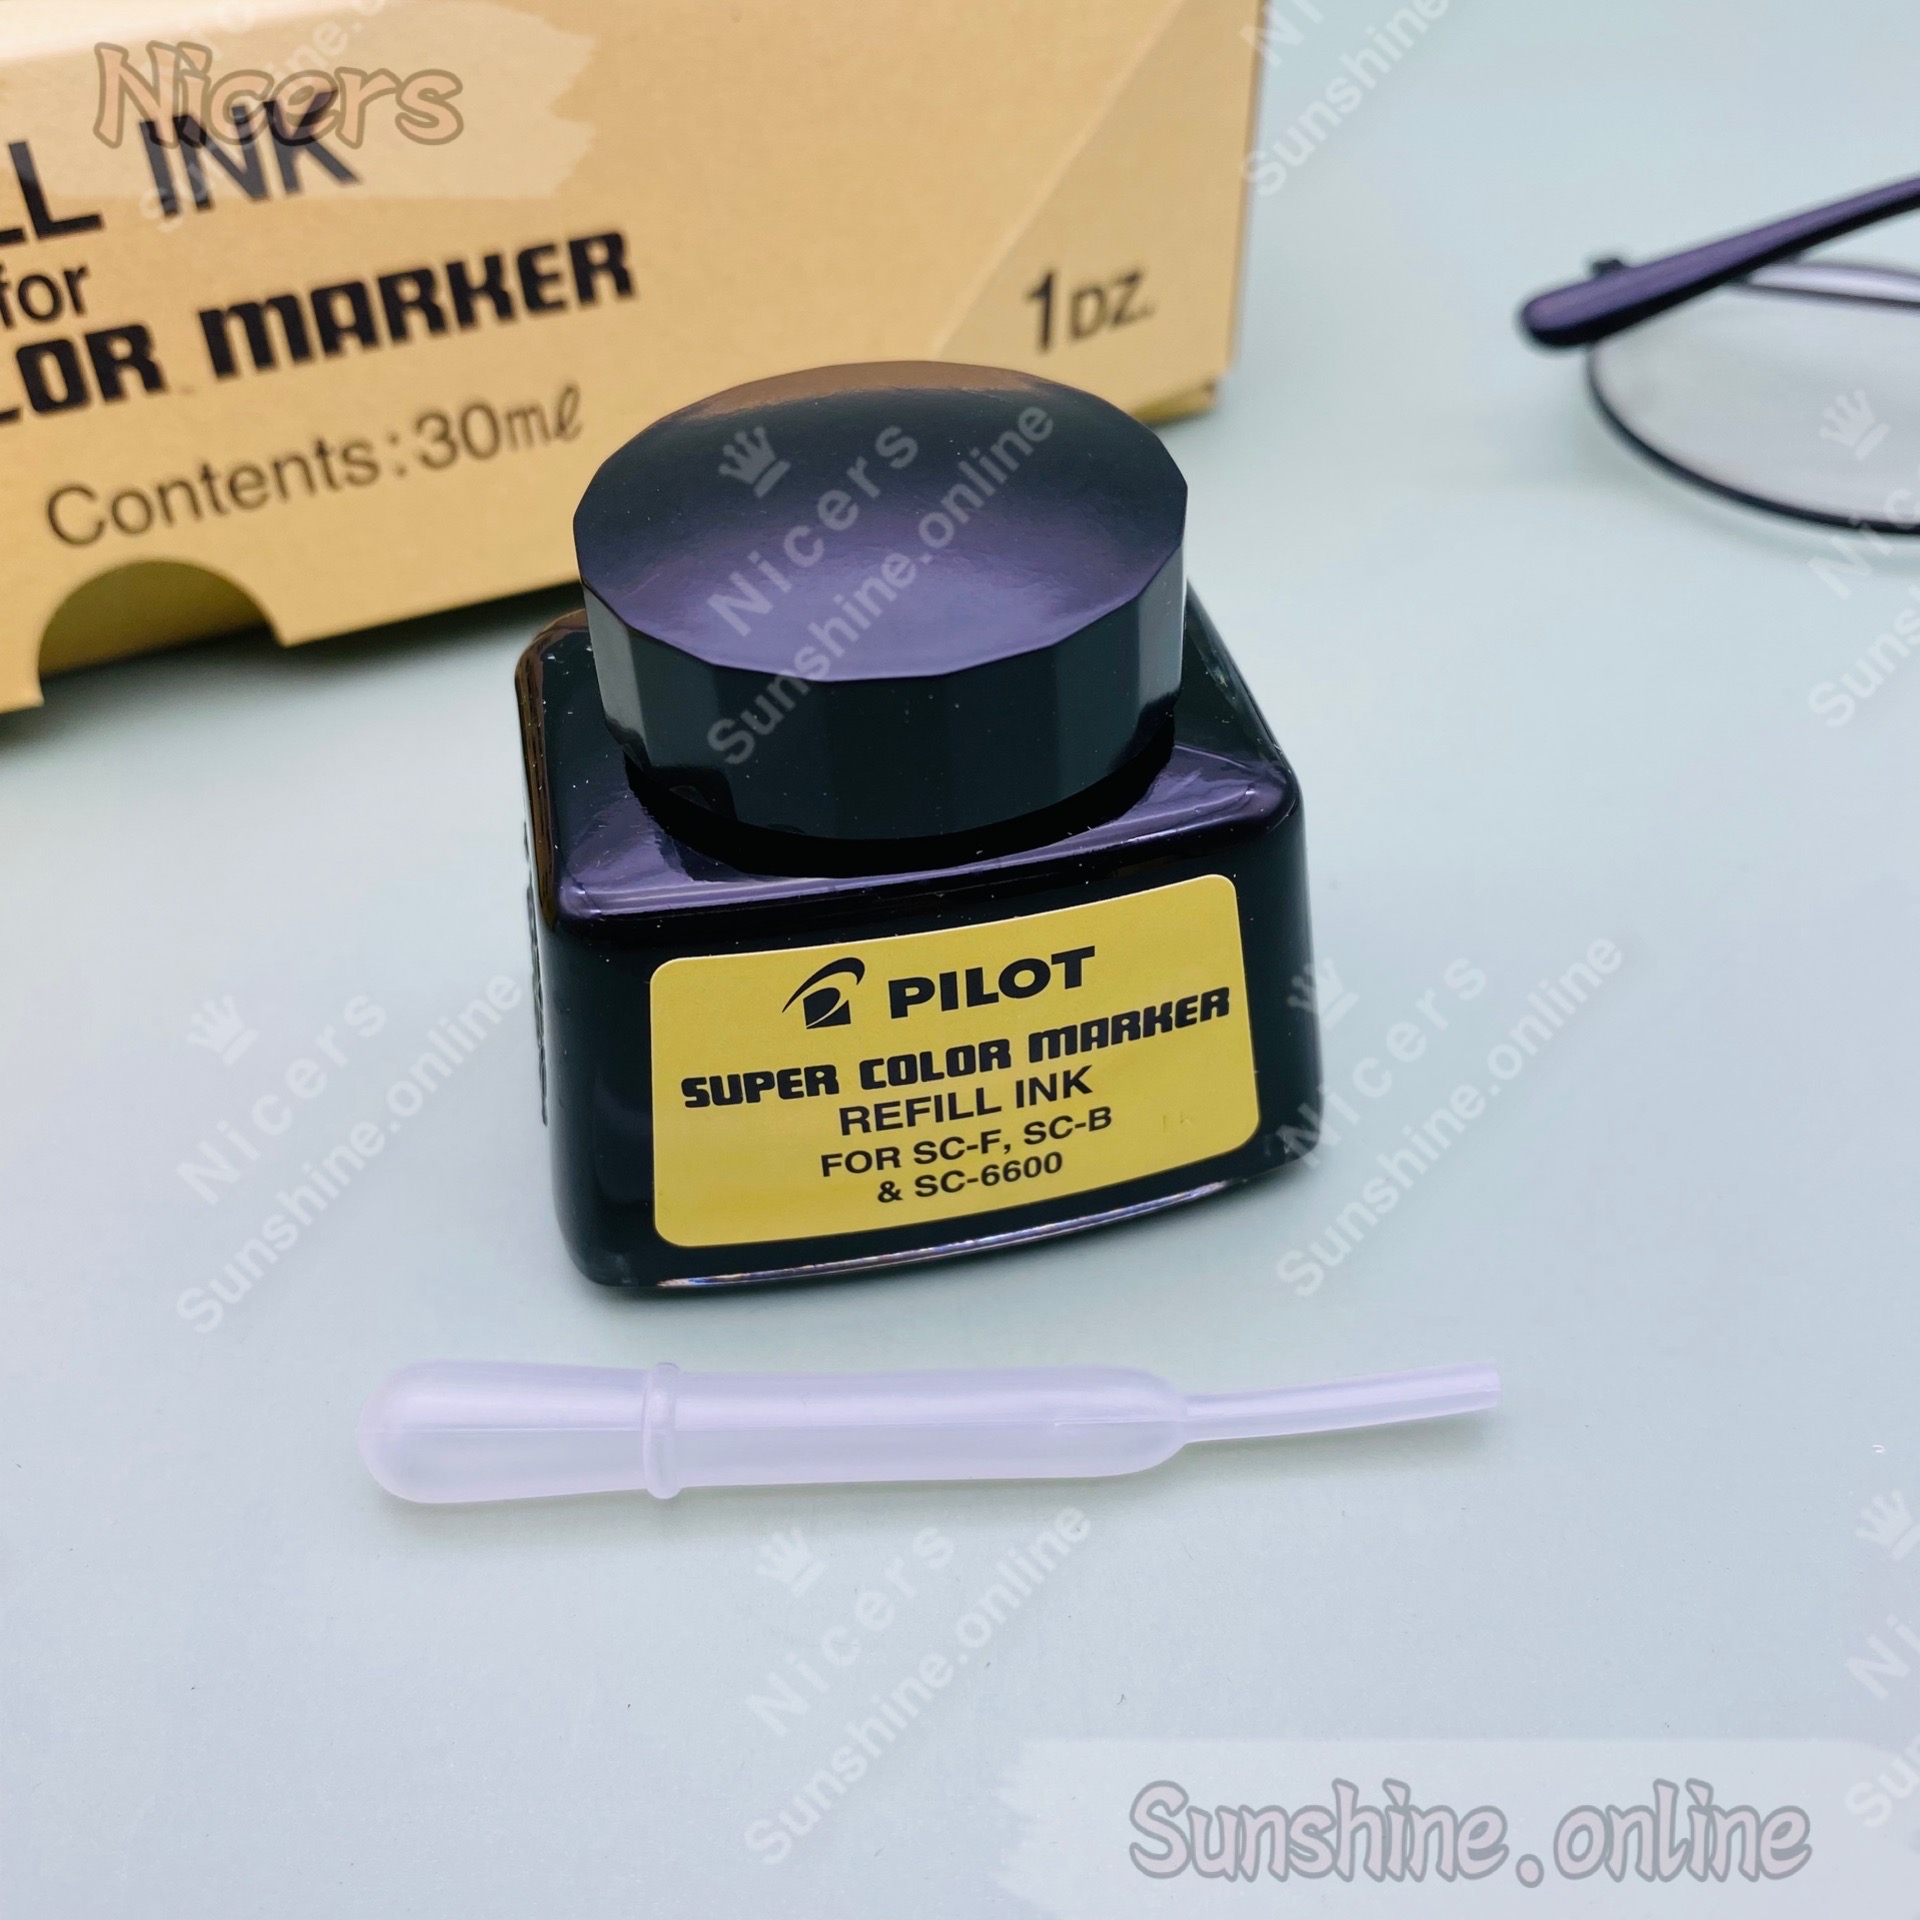 Pilot SCRF-BLK 30ml Ink Refill for SC-6600 Marker